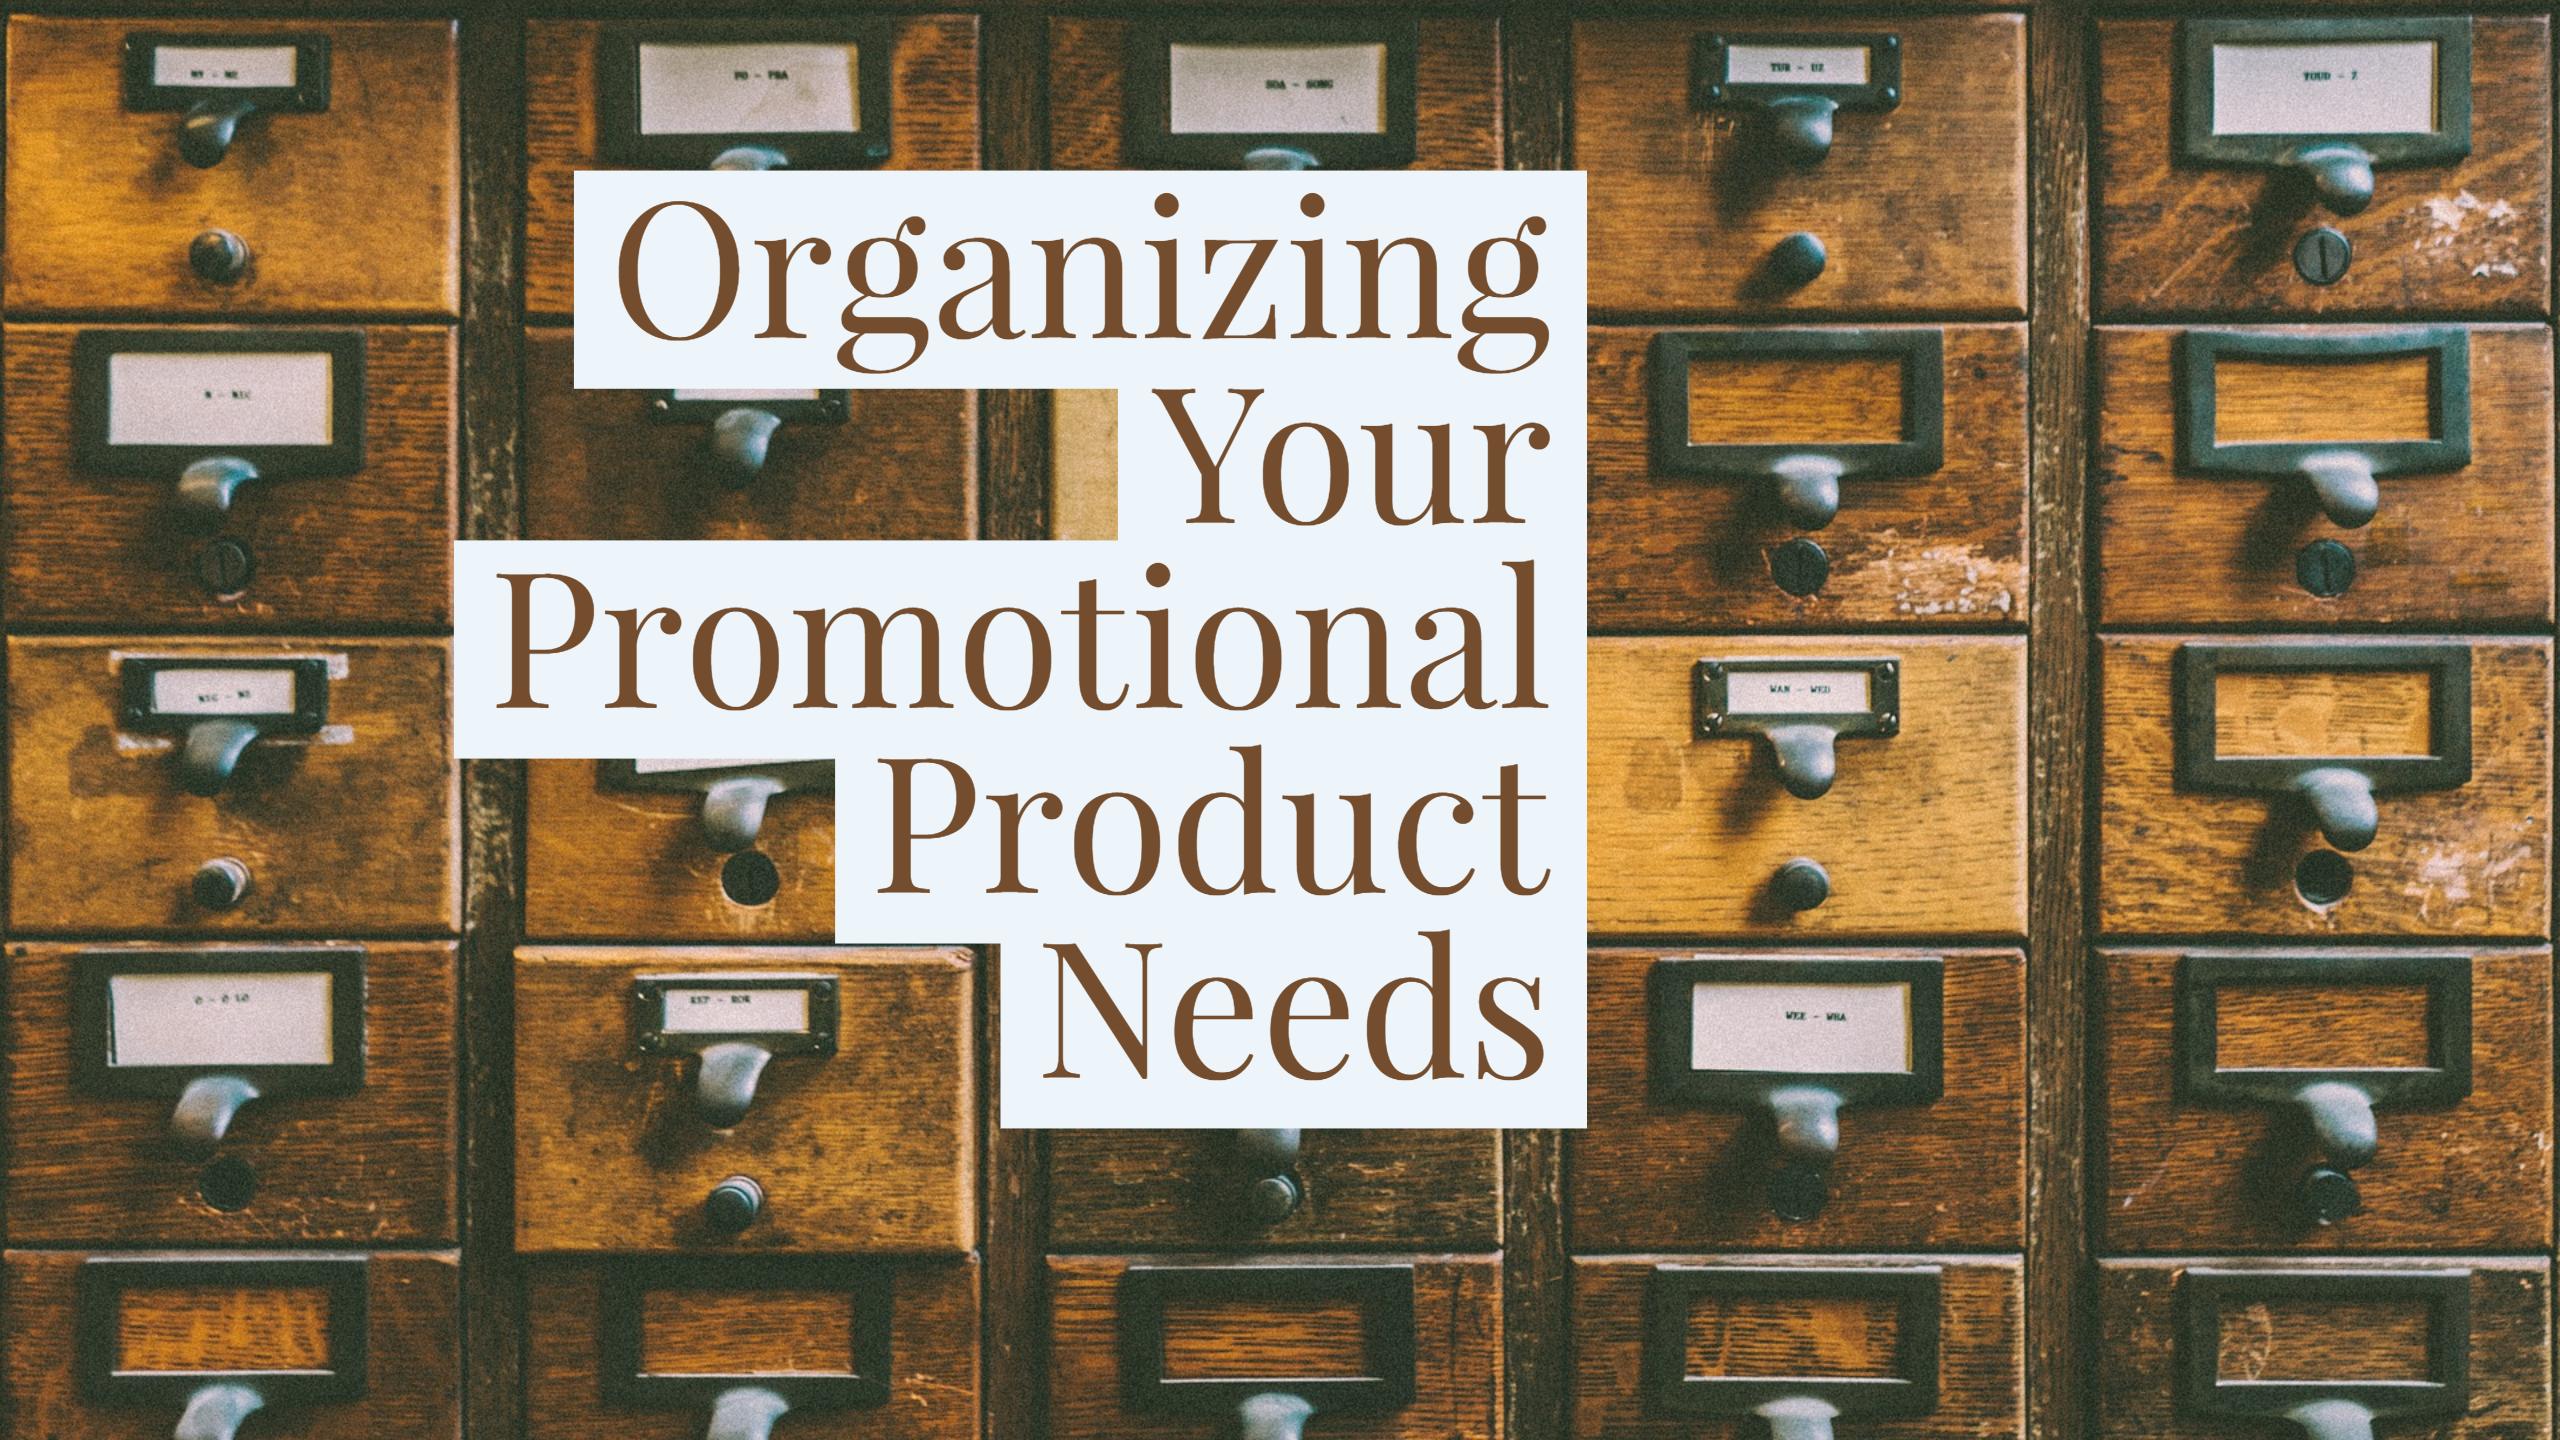 Organizing Your Promotional Product Needs